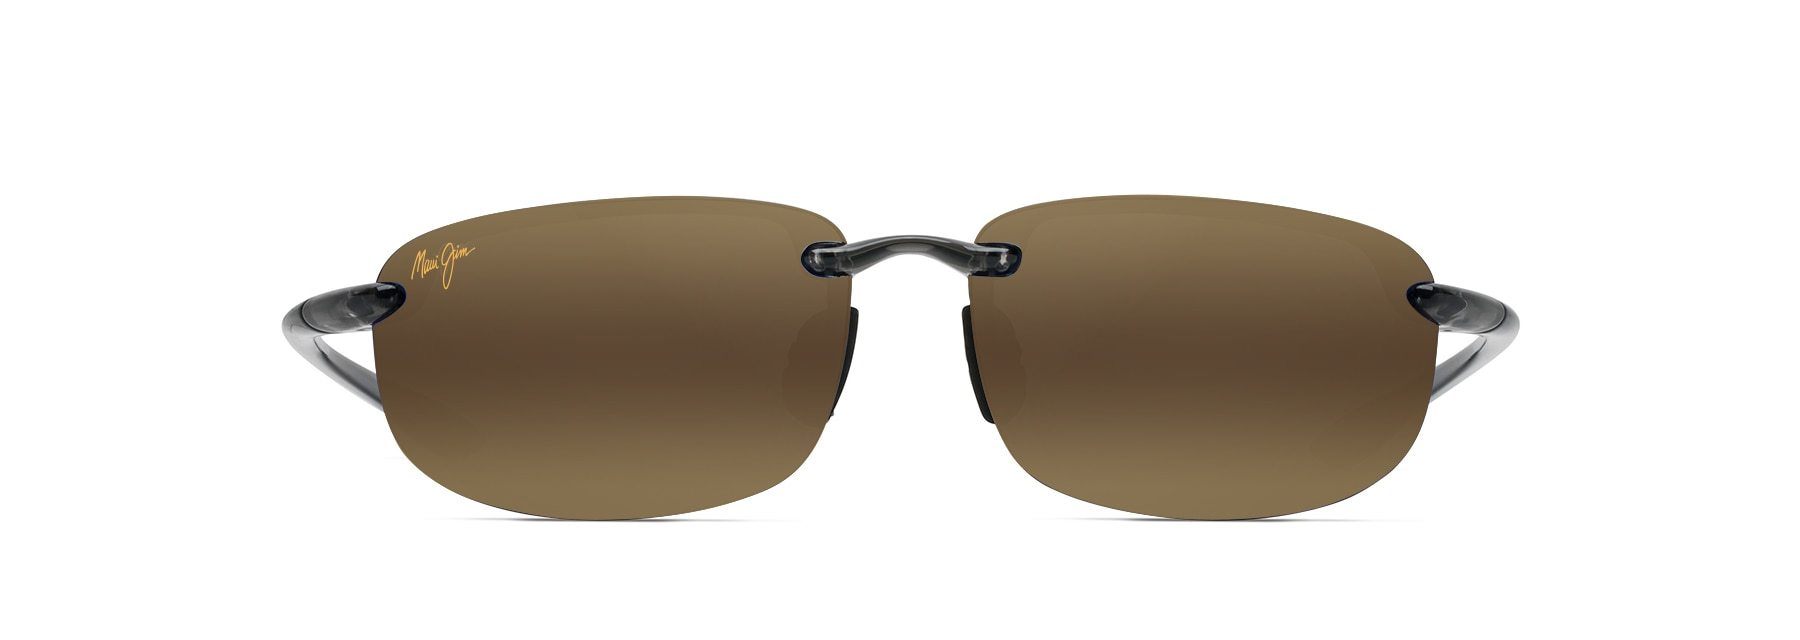 MyMaui Ho'Okipa MM407-014 Sunglasses